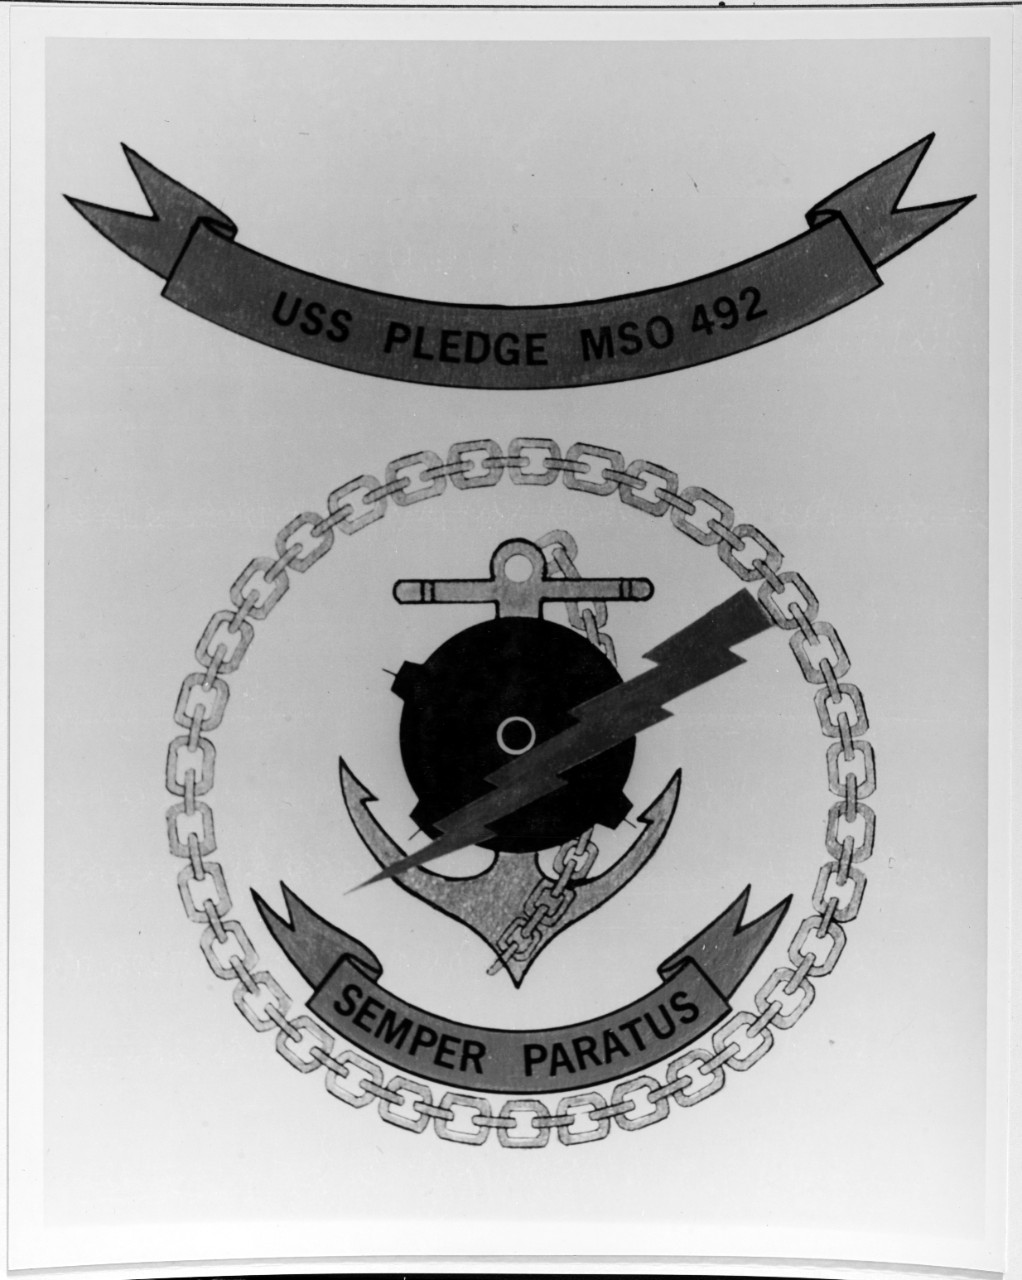 Insignia: USS PLEDGE (MSO-492)